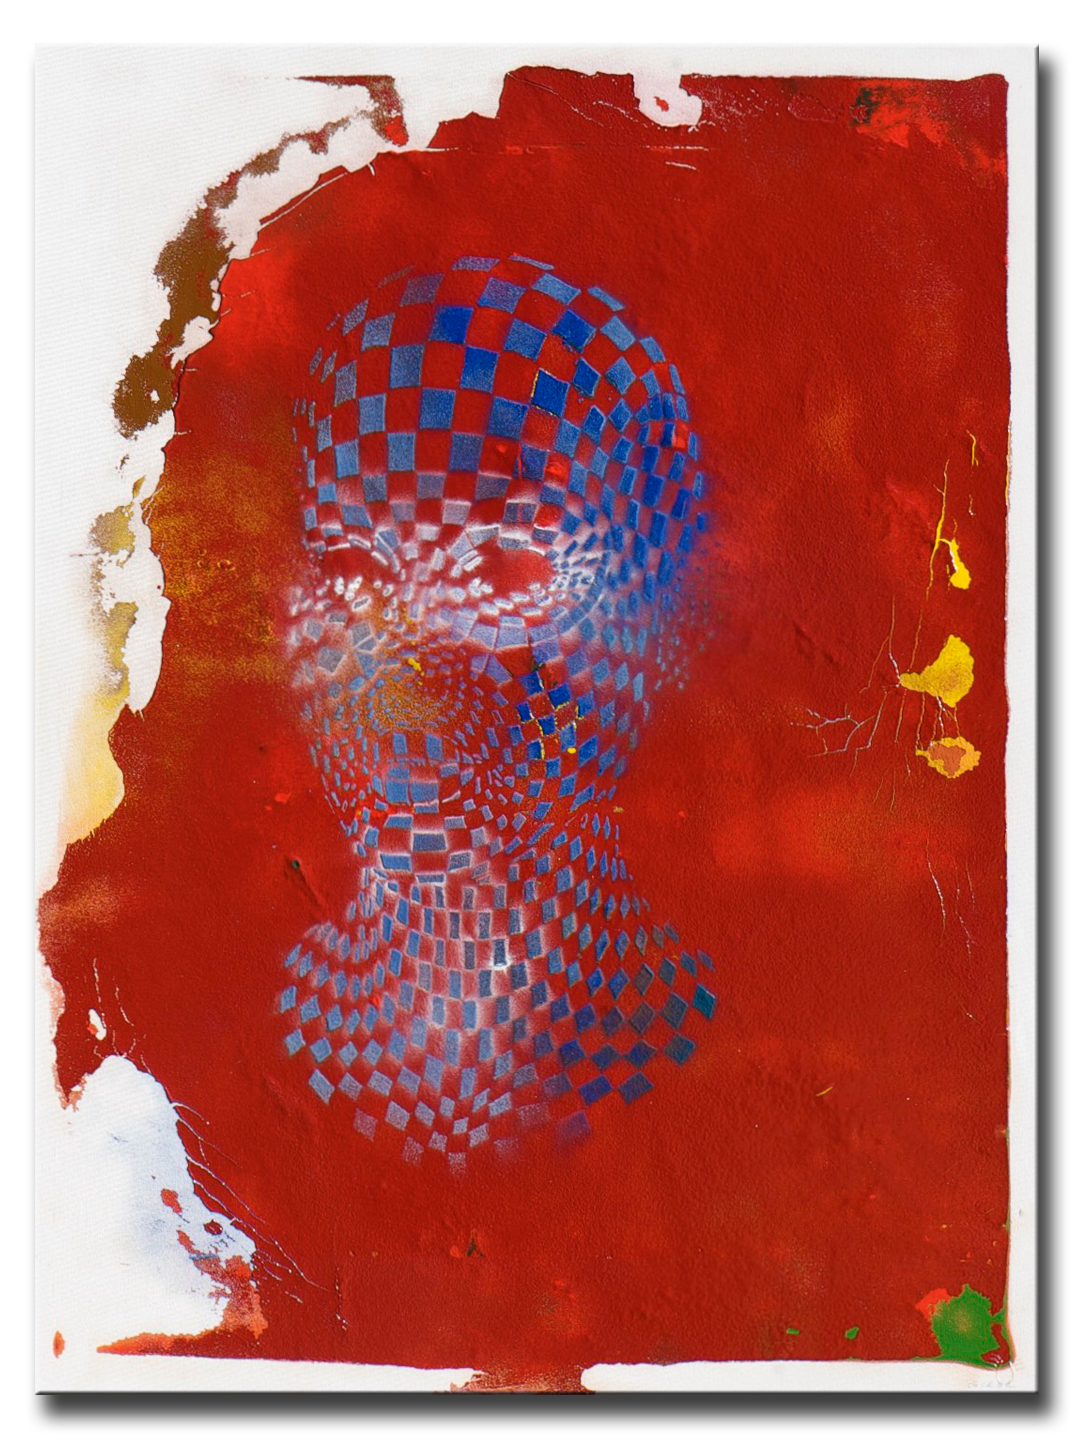 Thomas Girbl "The Inside" 120 x 160 cm 2014